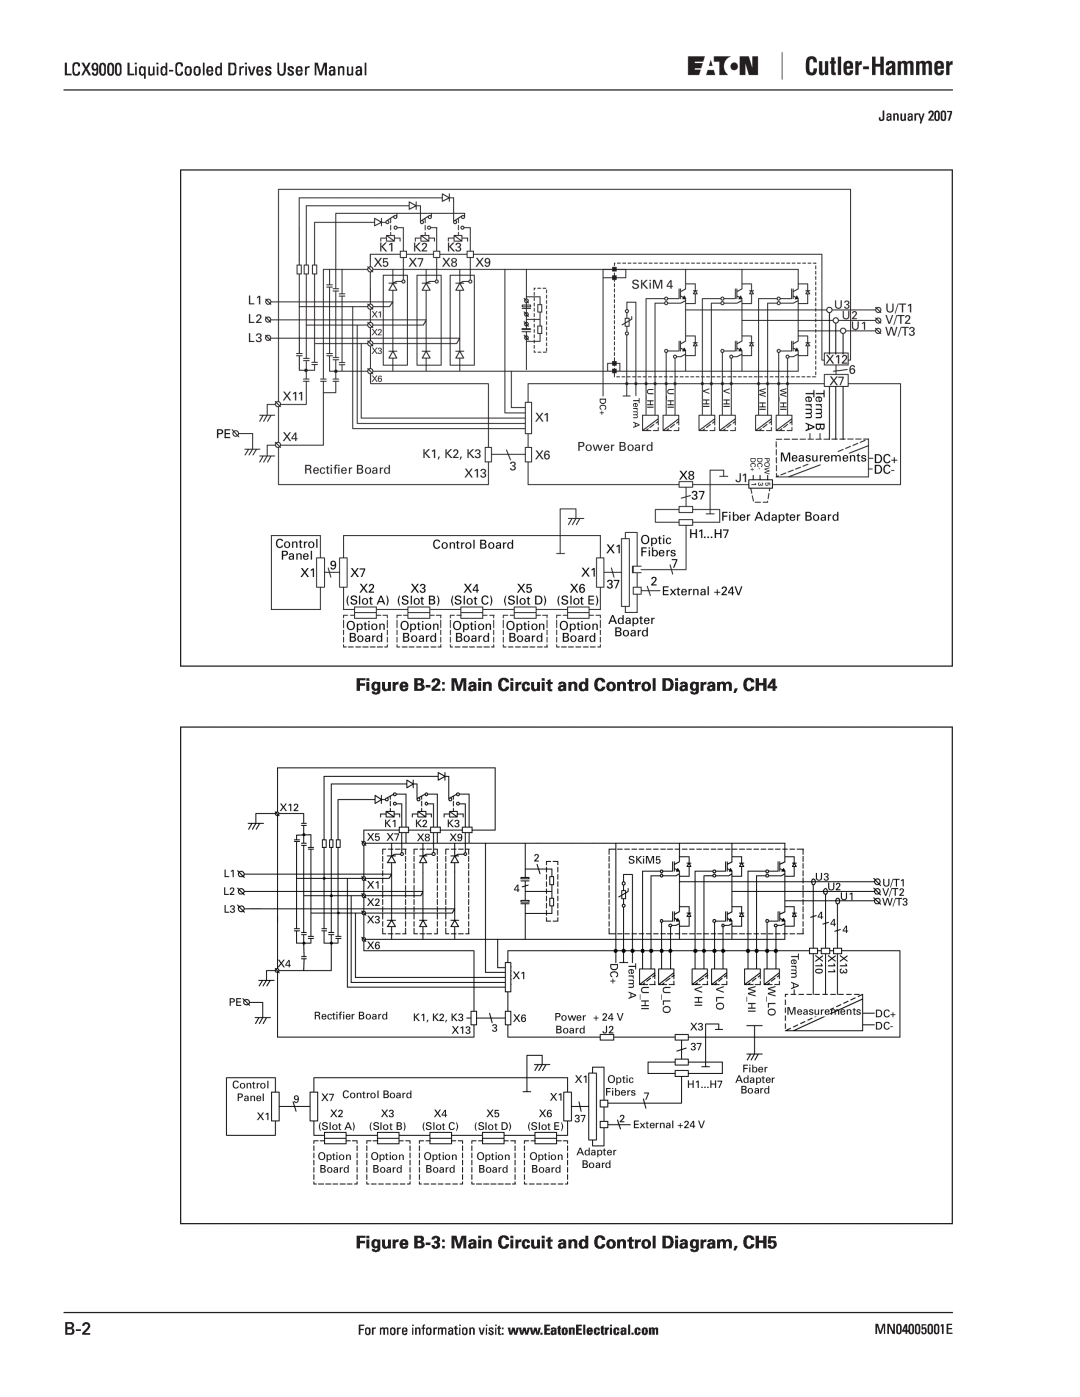 J. T. Eaton LCX9000 Figure B-2 Main Circuit and Control Diagram, CH4, Figure B-3 Main Circuit and Control Diagram, CH5 